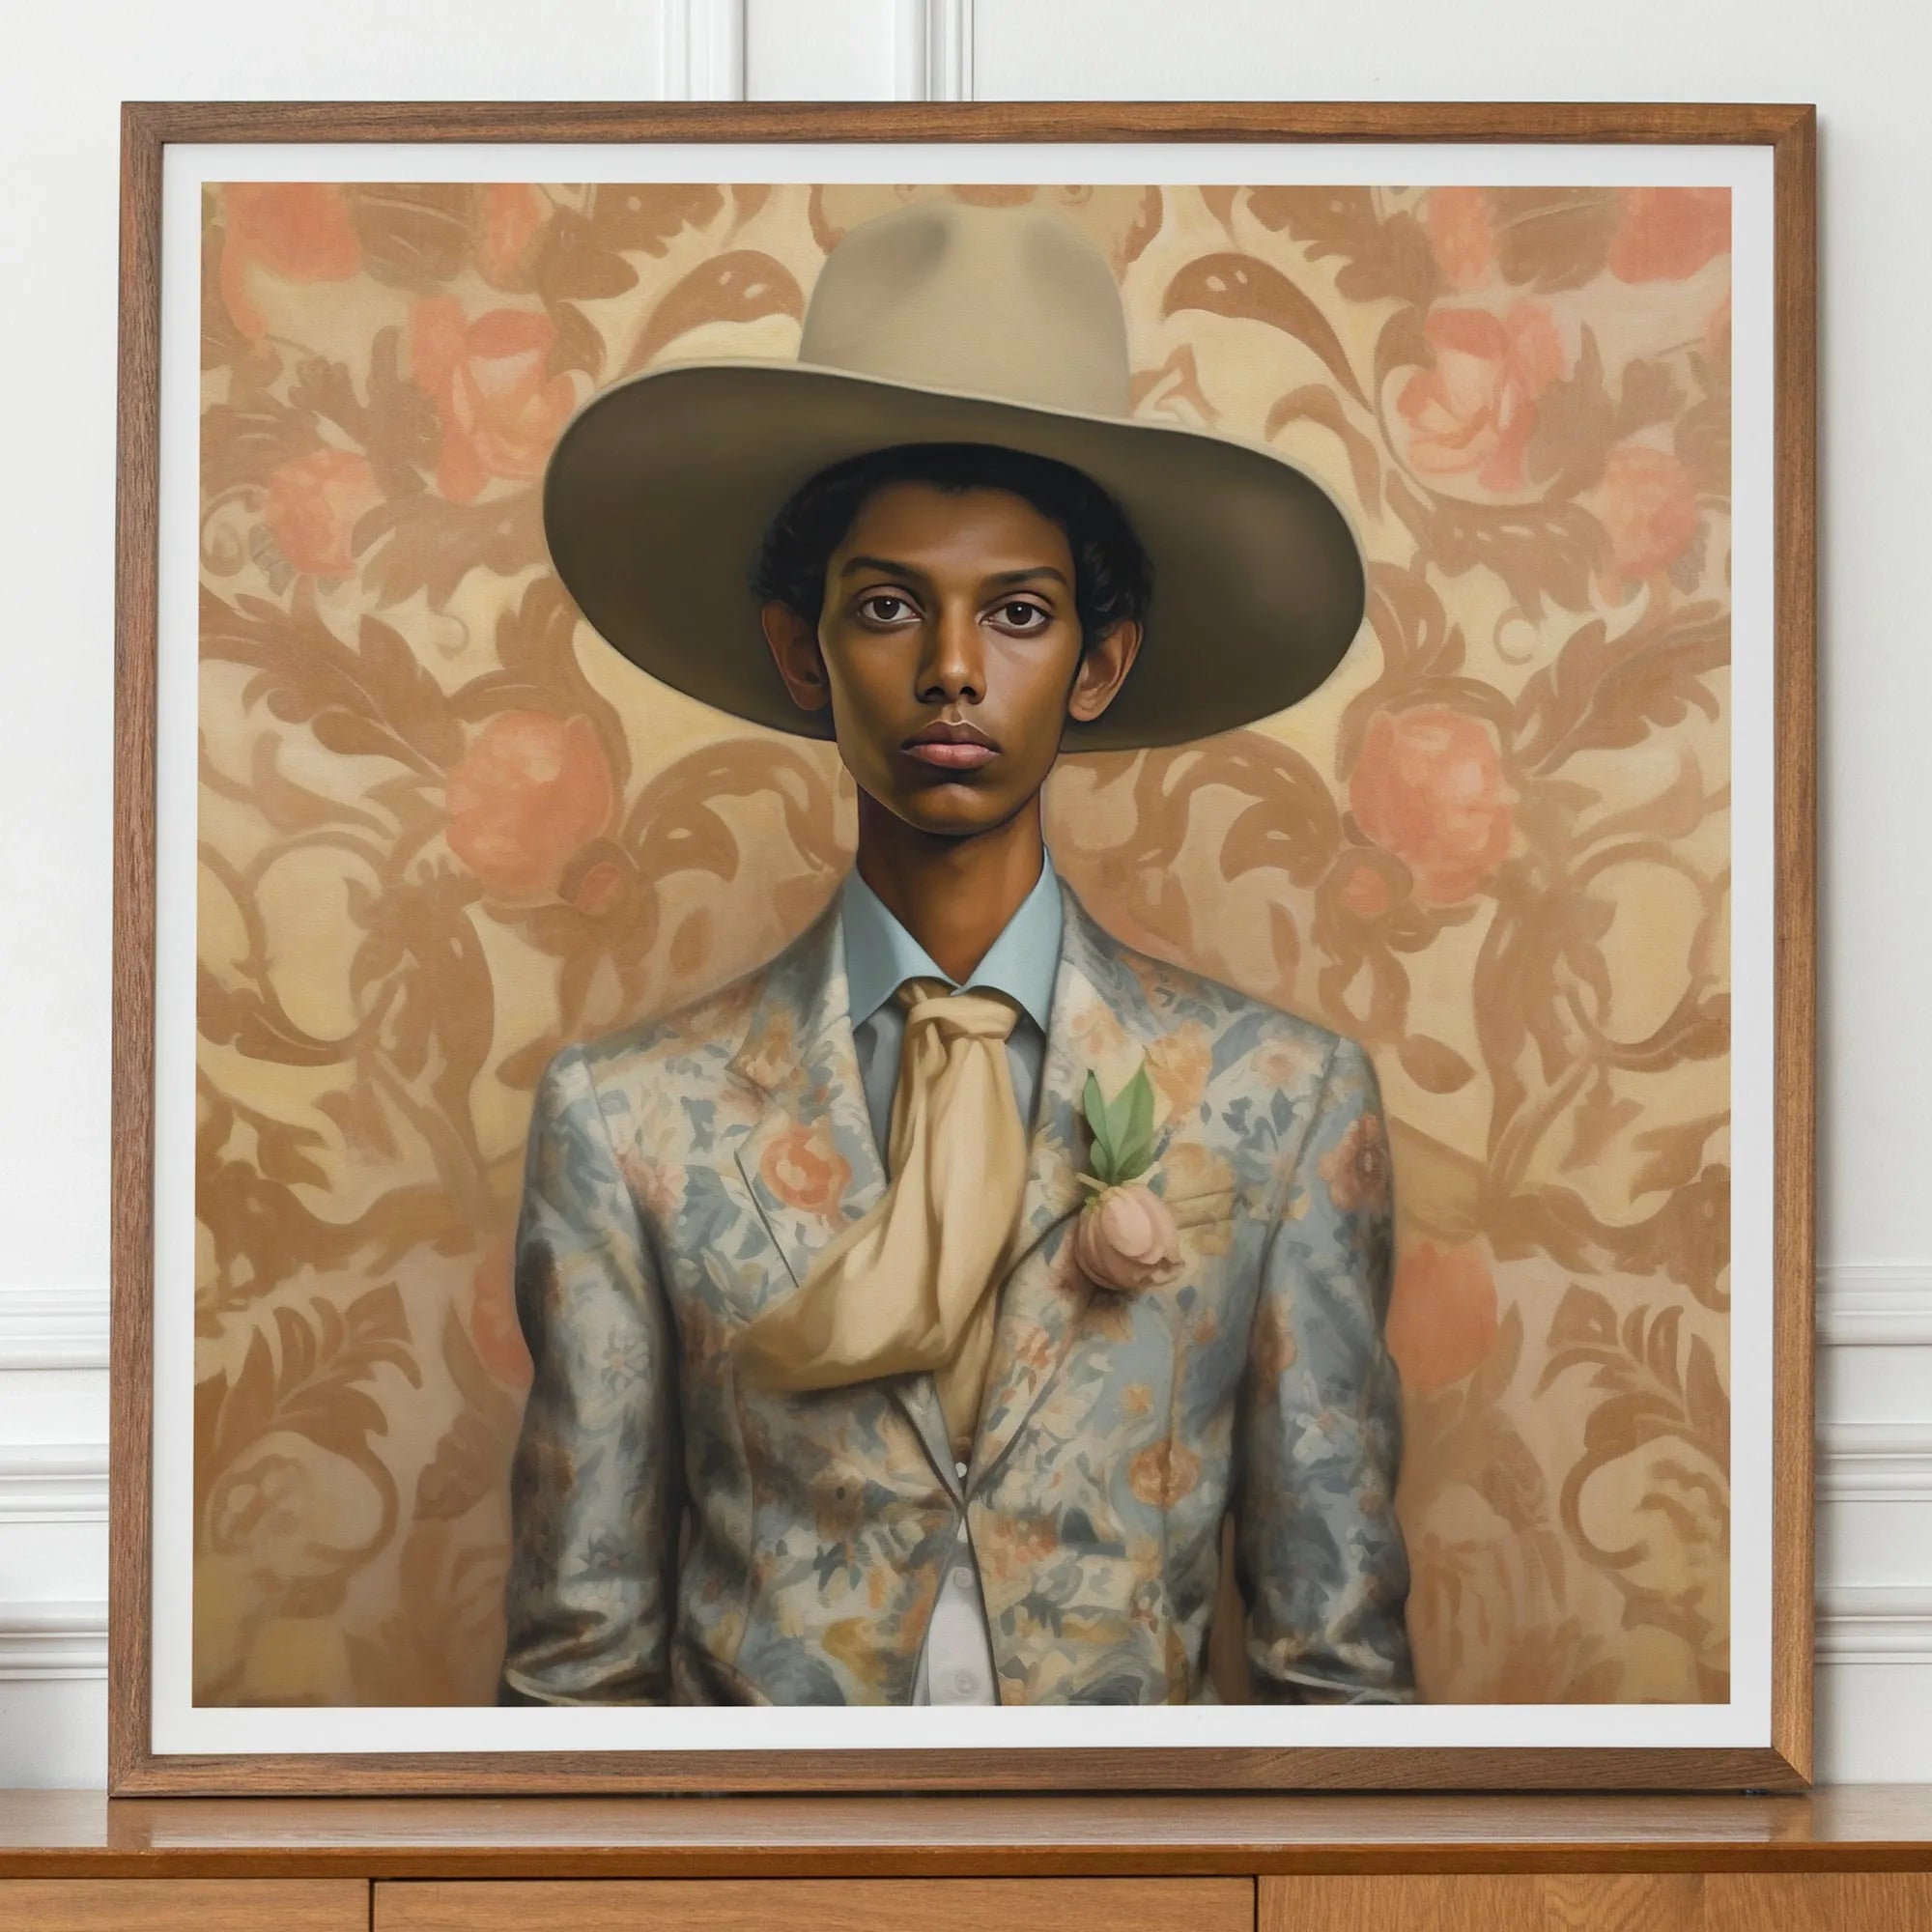 Mallaravan The Transgender Cowboy - F2m Dandy Transman Art - 30’x30’ - Posters Prints & Visual Artwork - Aesthetic Art